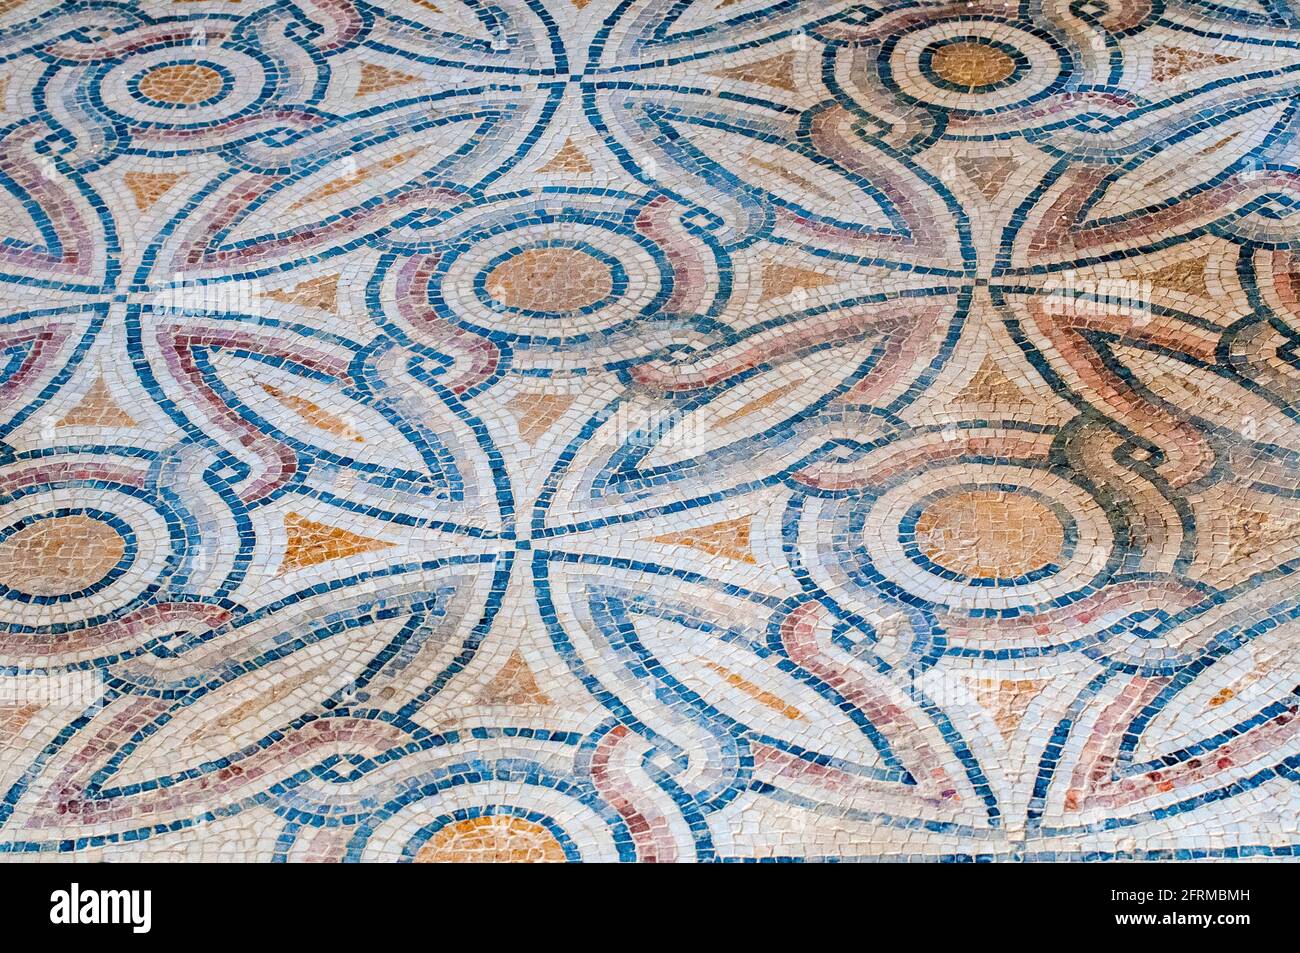 Geometric mosaic floor design in the Nile House at Zippori National Park The city of Zippori (Sepphoris) A Roman Byzantine period city with an abundan Stock Photo